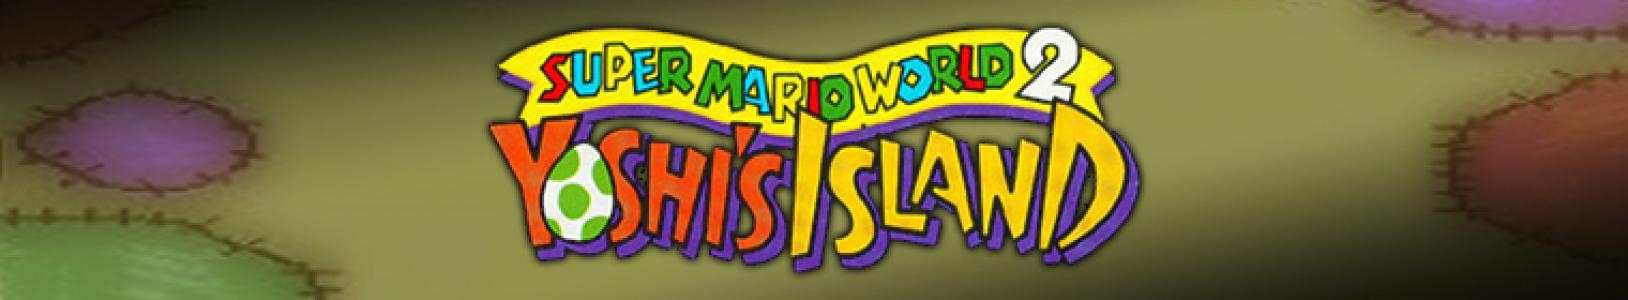 Super Mario World 2: Yoshi's Island banner